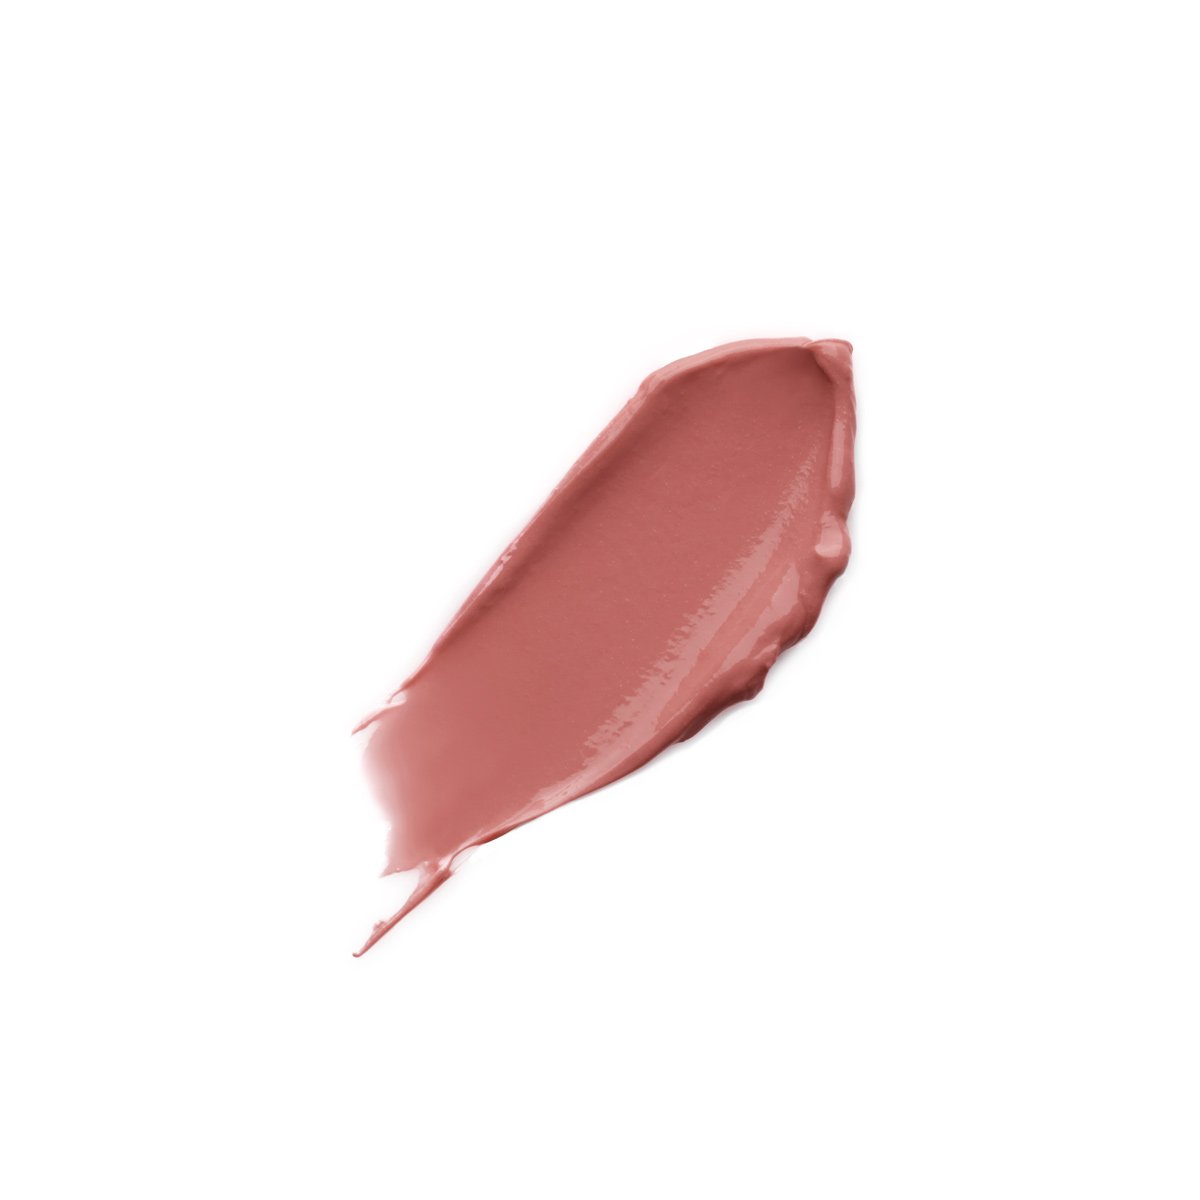 HEVYN - COOL BEIGEY ROSE - cool beige rose lipstick lip balm